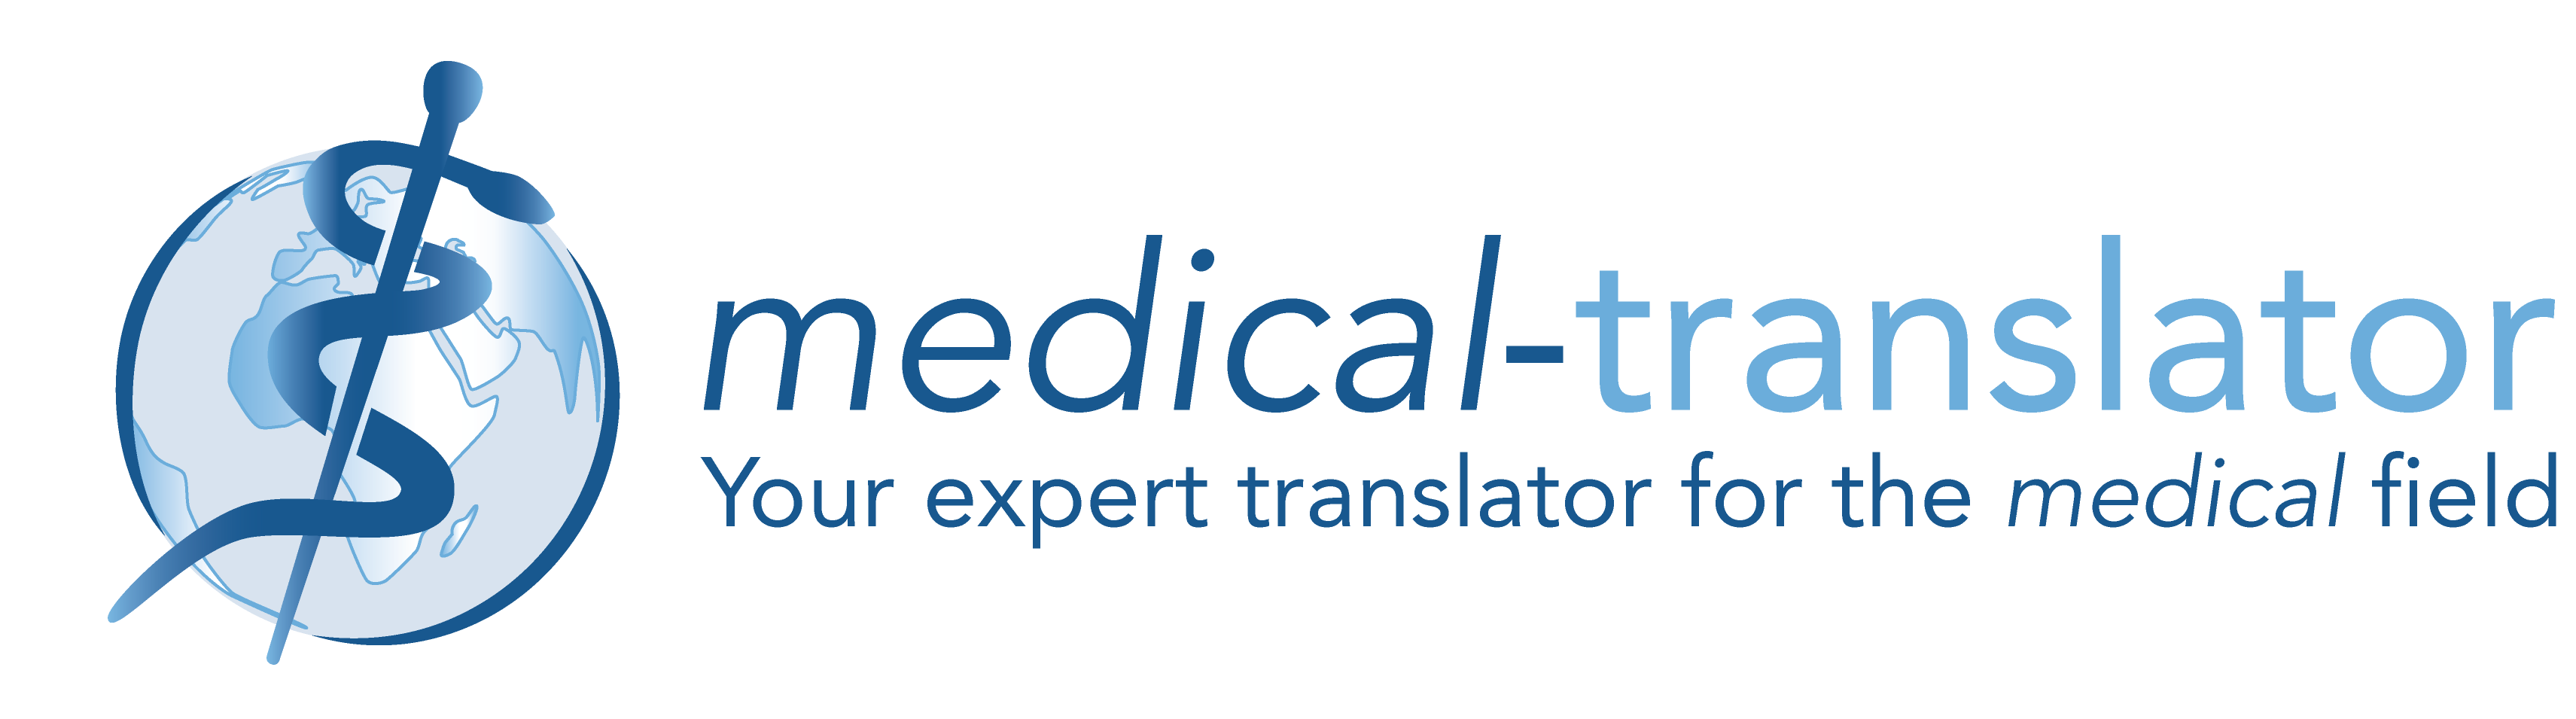 medical-translator Logo